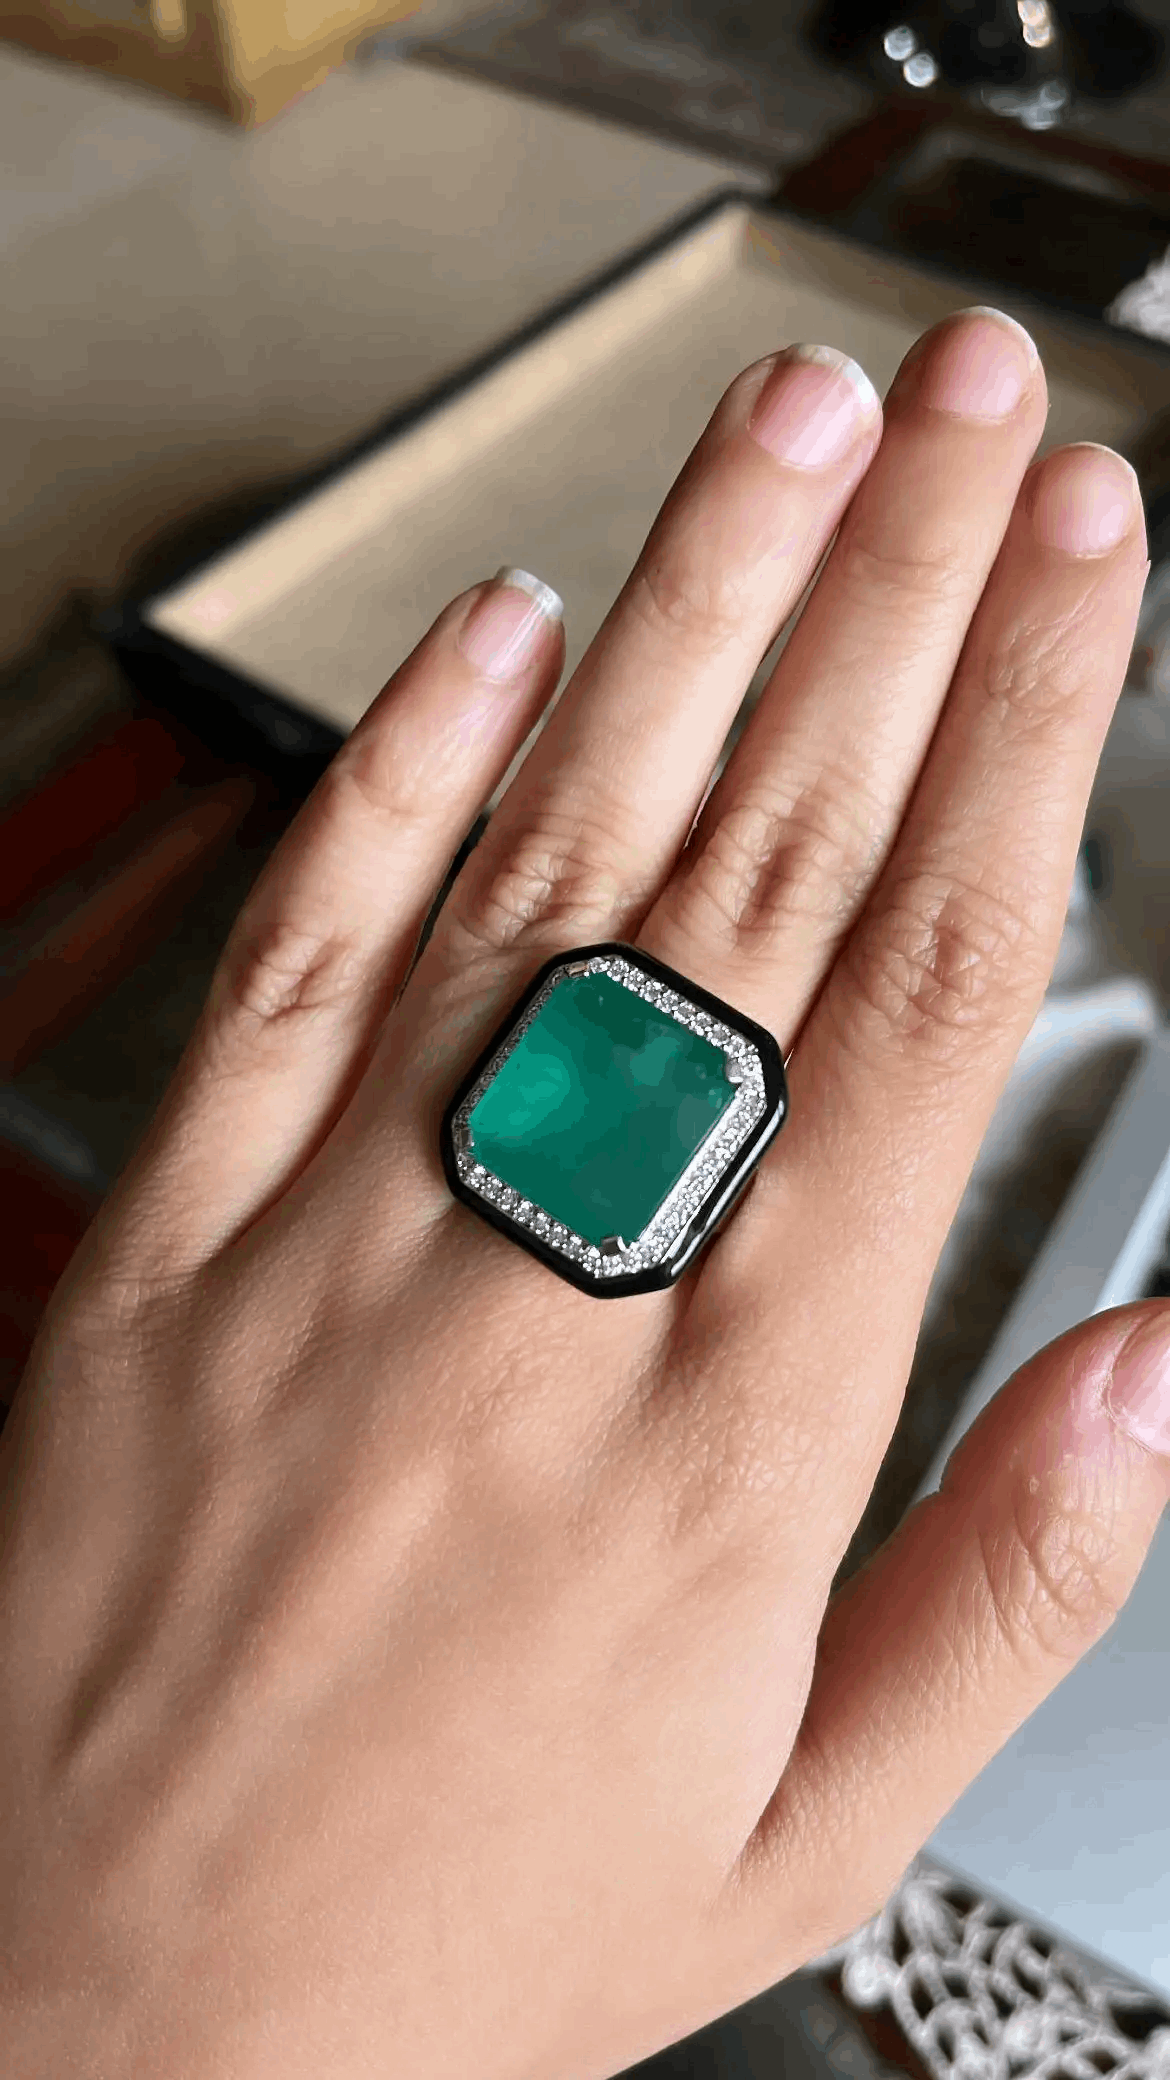 Zambian Emerald 16.72 Carats, Black Enamel & Diamonds Cocktail/ Engagement Ring